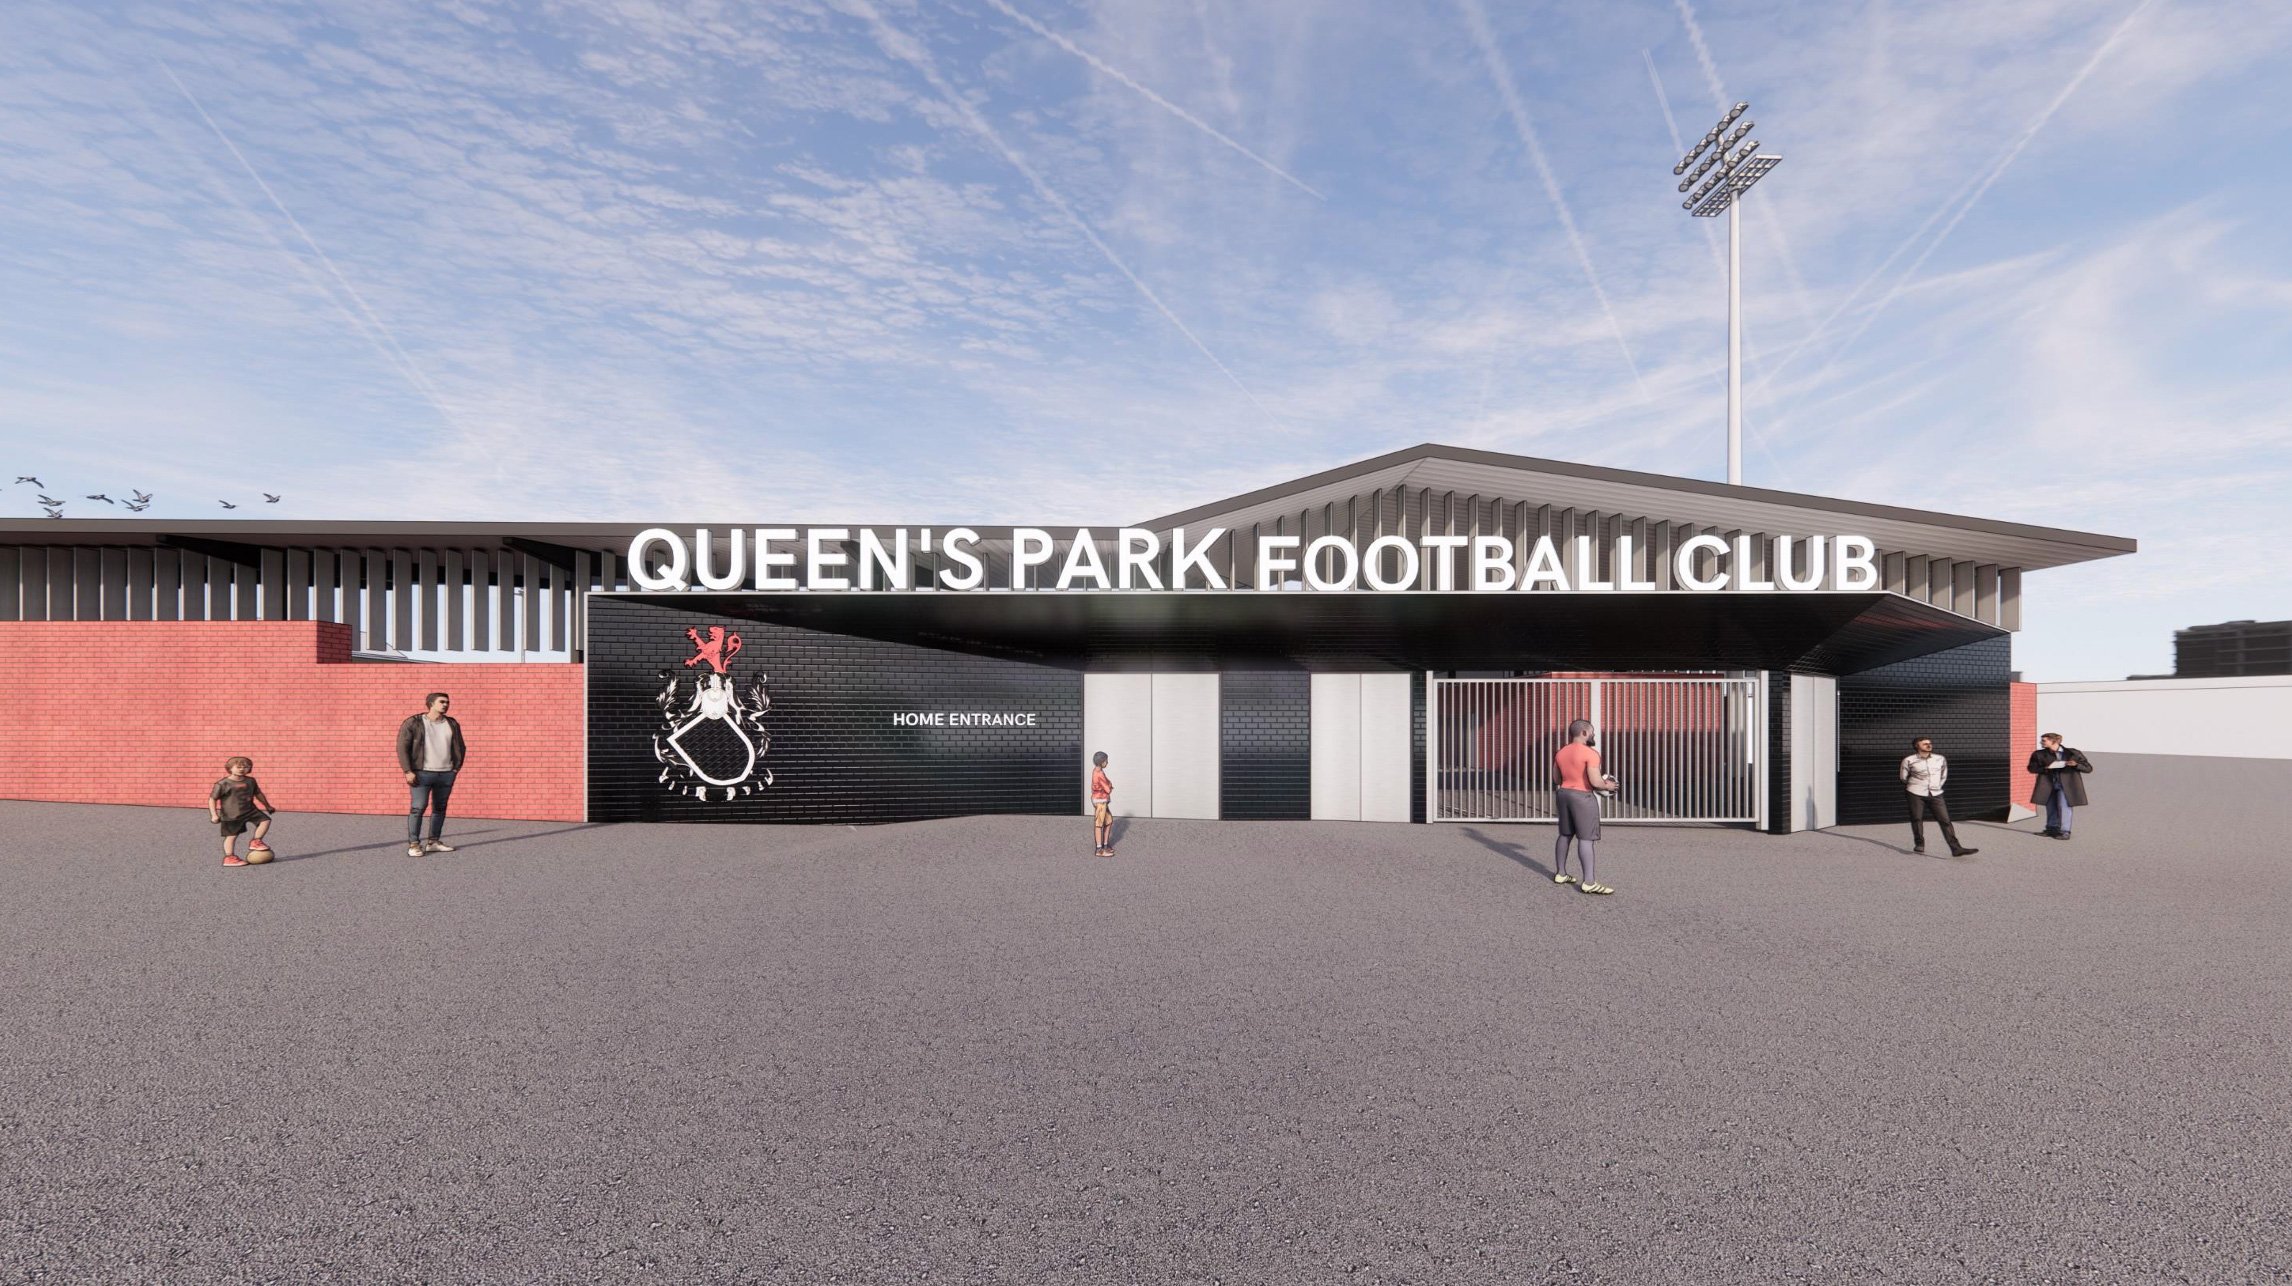 Queen's Park secures permission for Lesser Hampden stadium plan